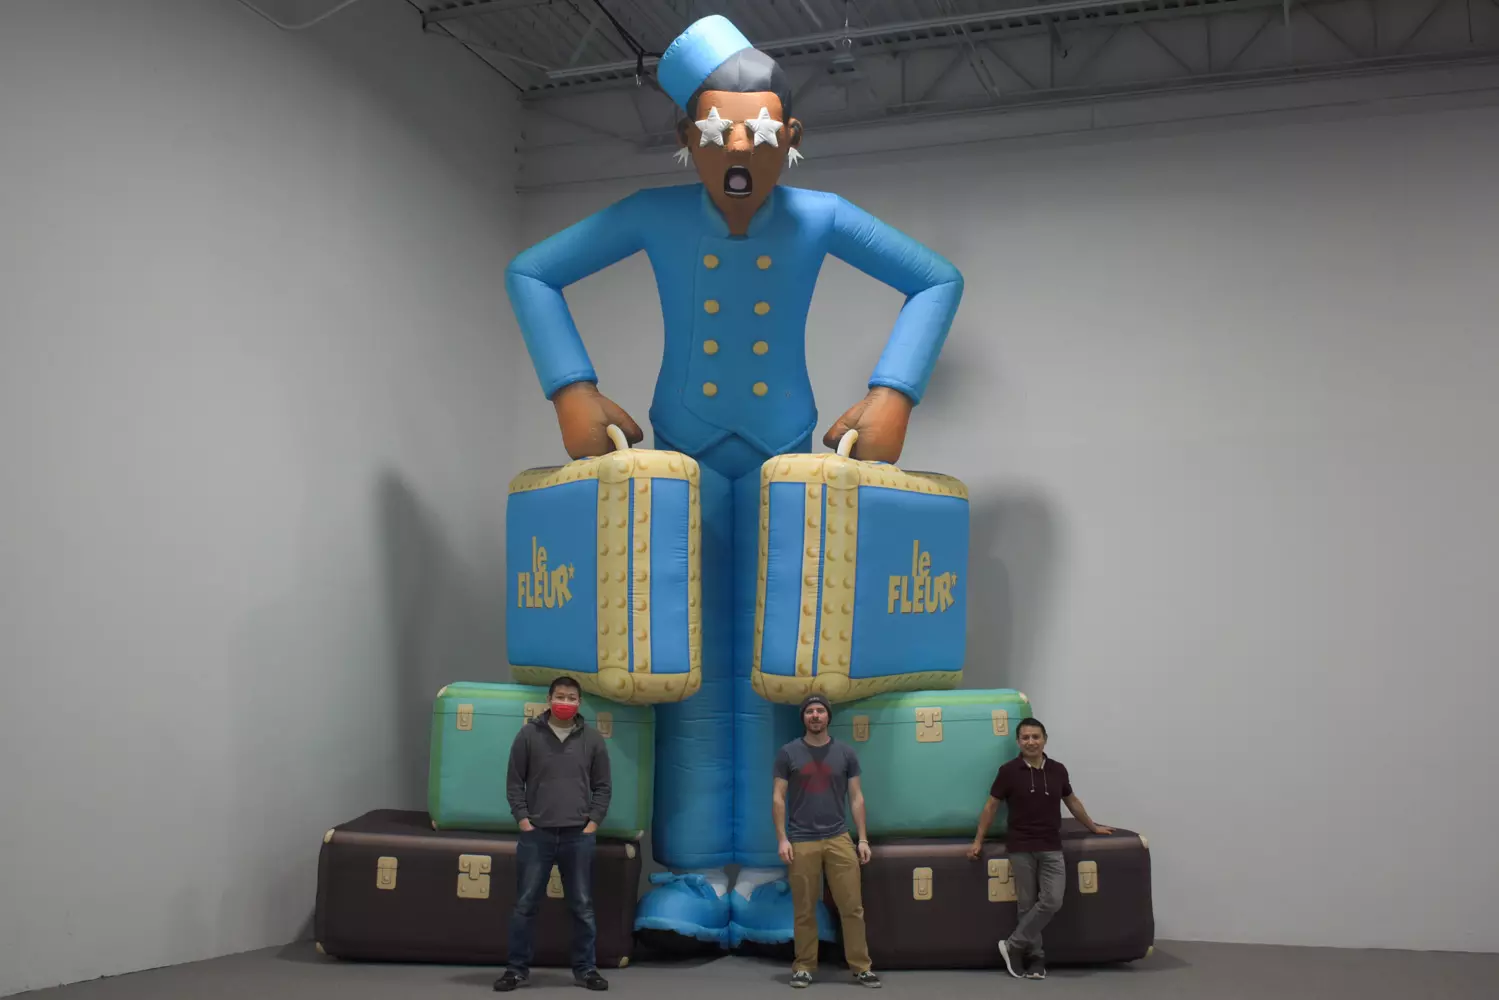 landmark employees next to custom inflatable bellhop